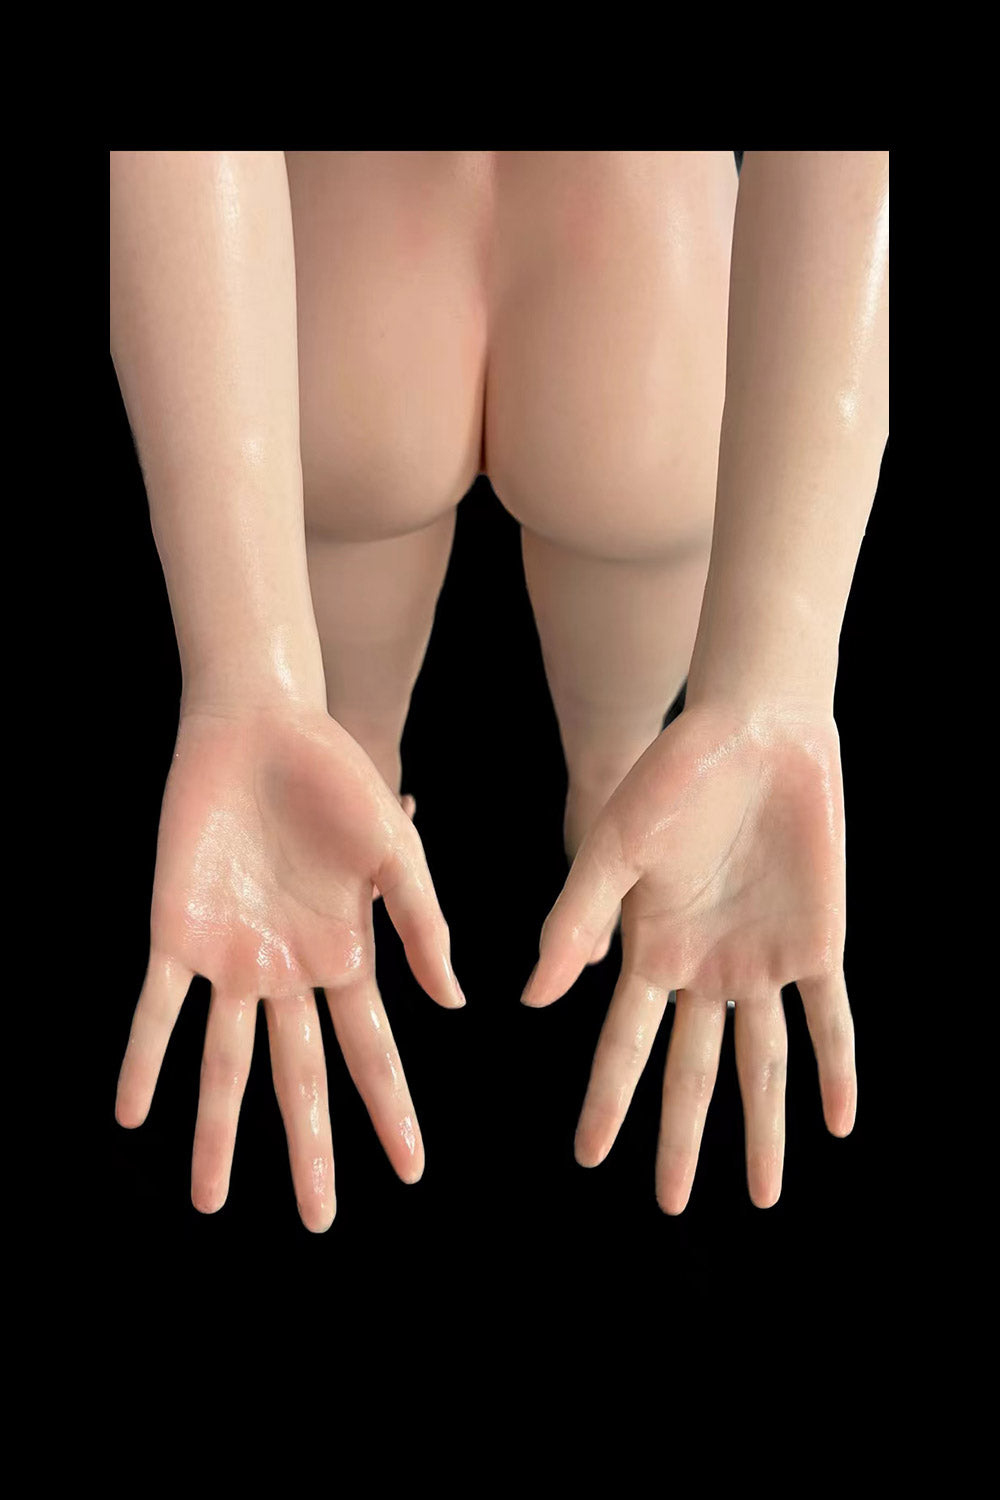 Gretta 163cm Full Silicone Love Doll Z1 Big Breasts Classical Girl Realistic Adult Sex Doll